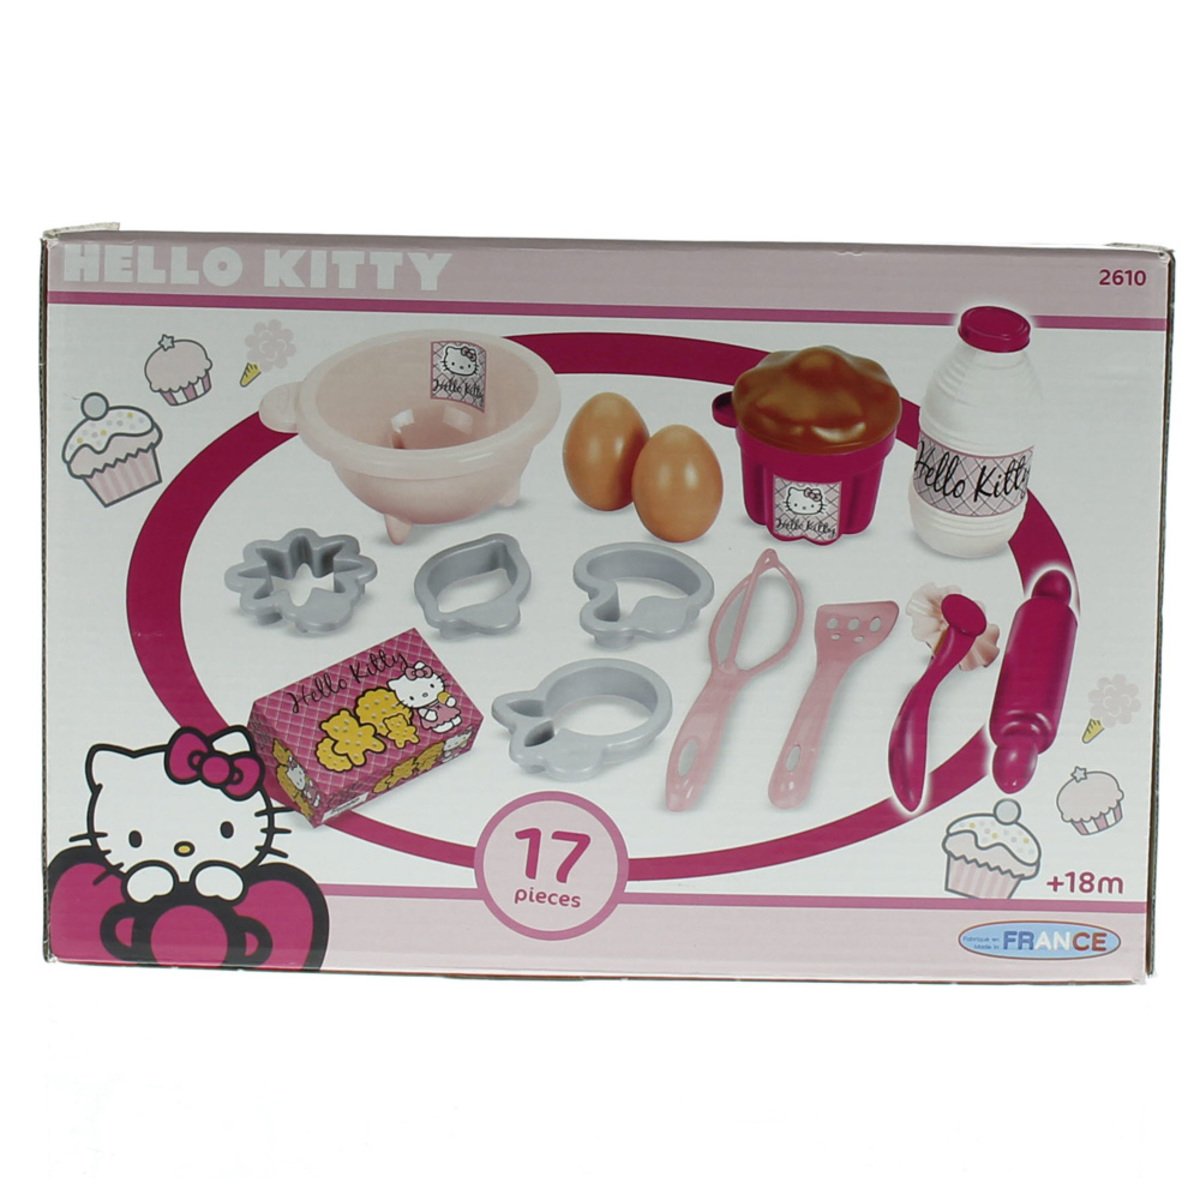 Hello Kitty Pastry Set